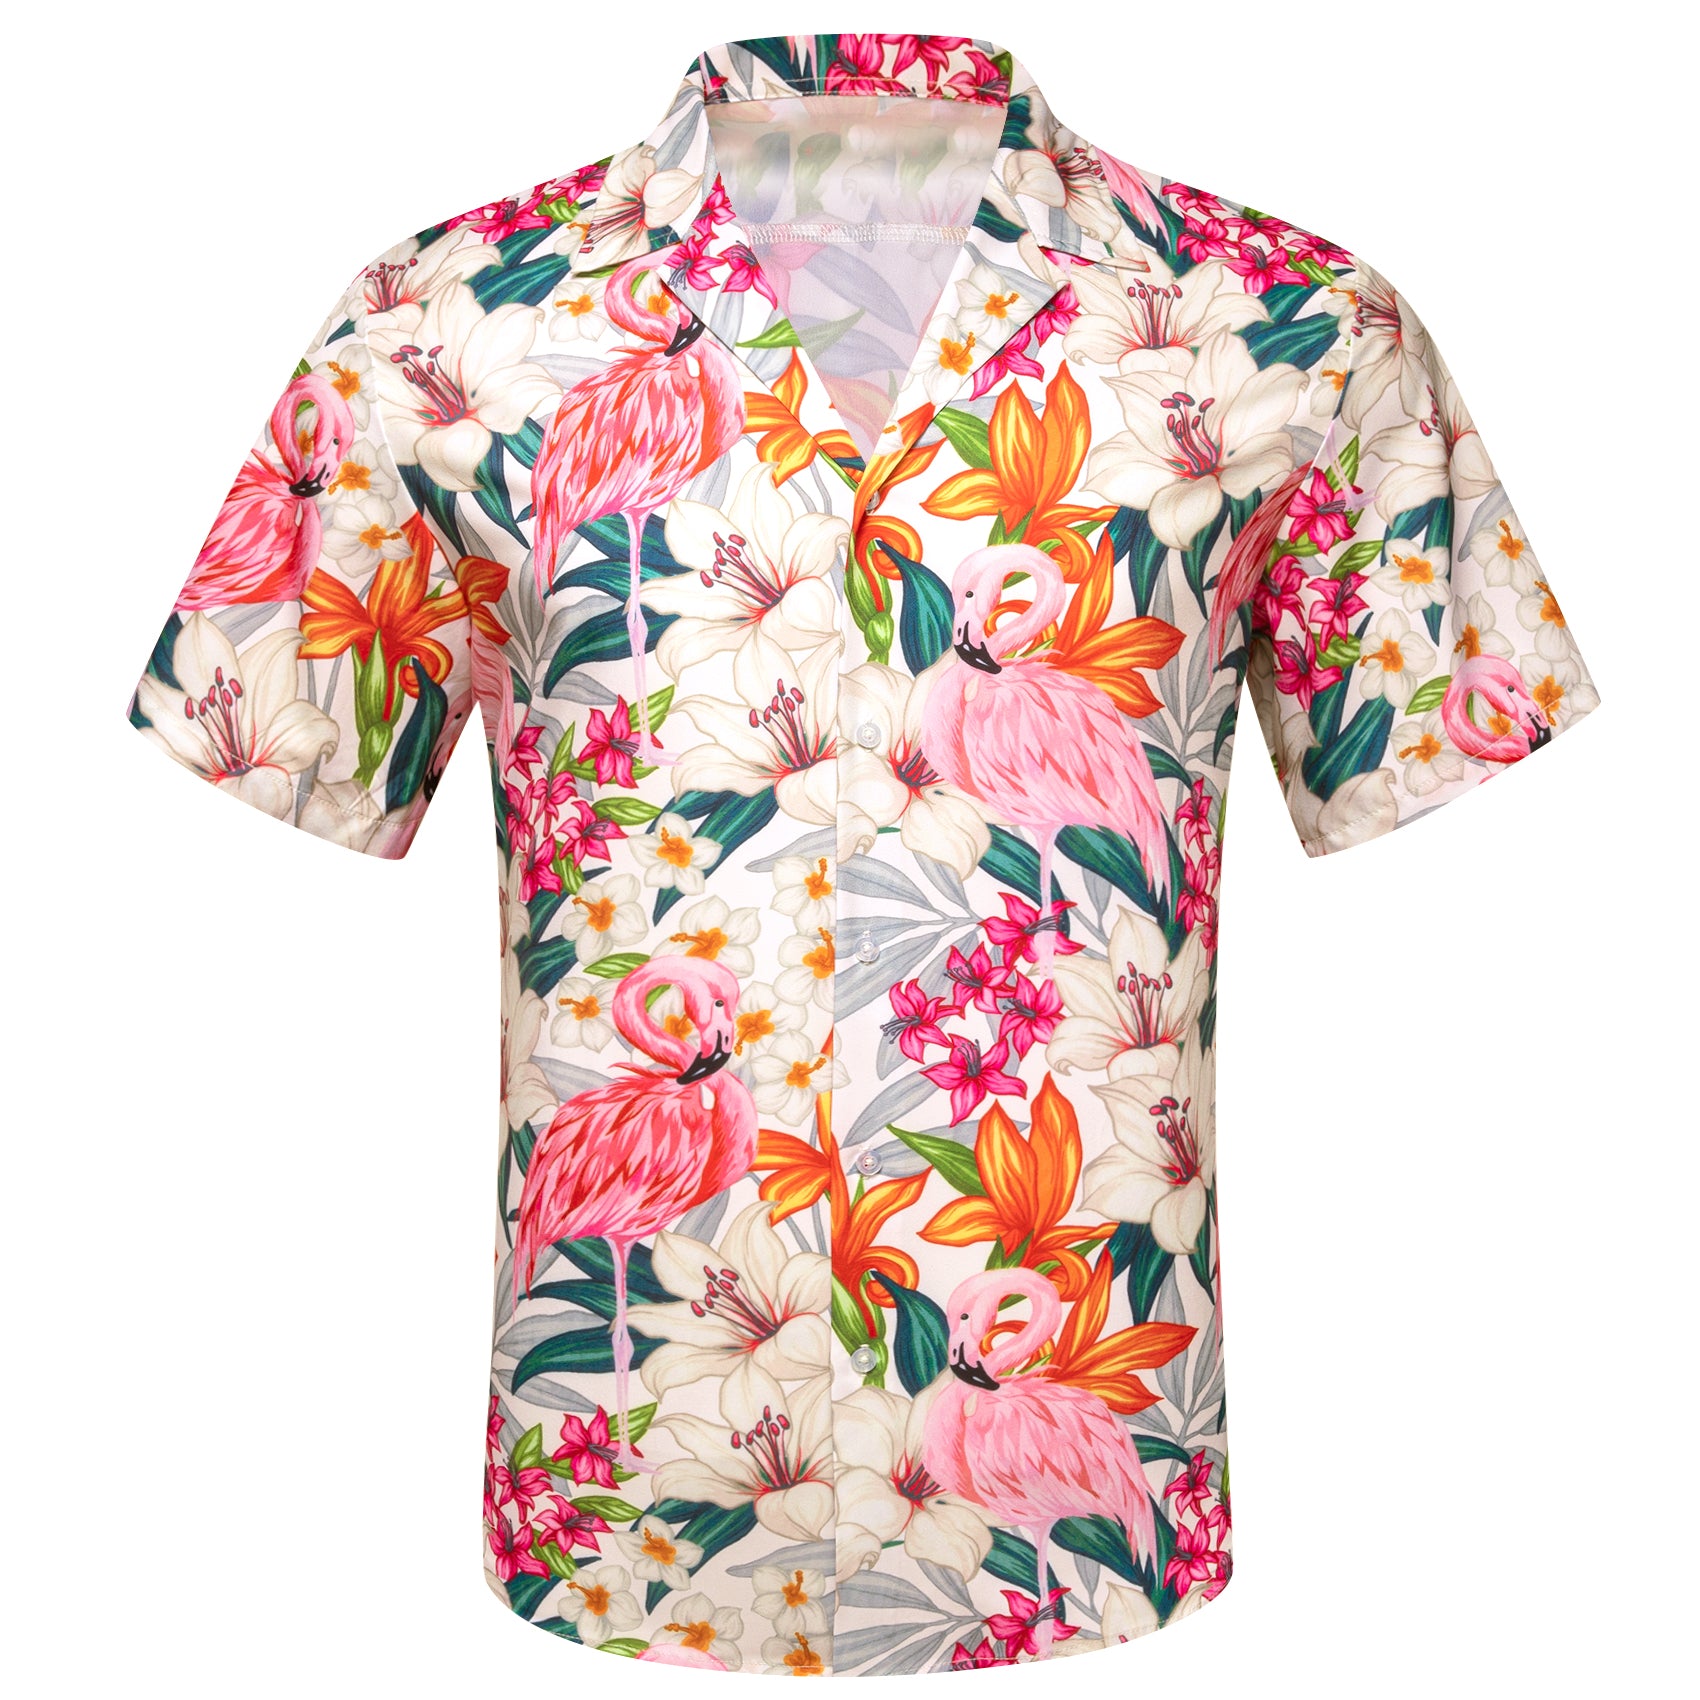 Men's Colorful Floral Pattern Short Sleeves Summer Hawaii Shirt